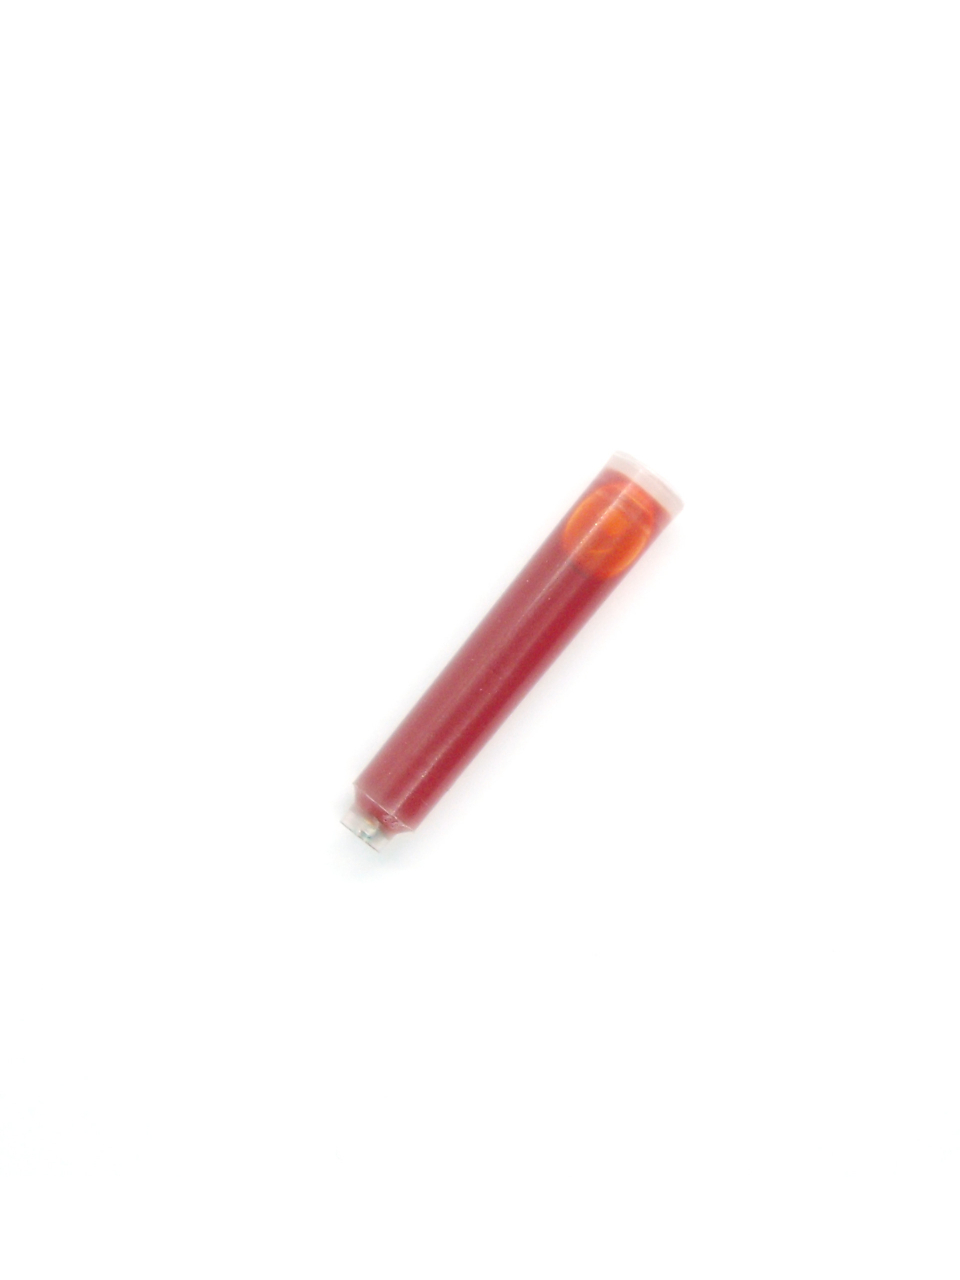 Ink Cartridges For Itoya Fountain Pens (Orange)